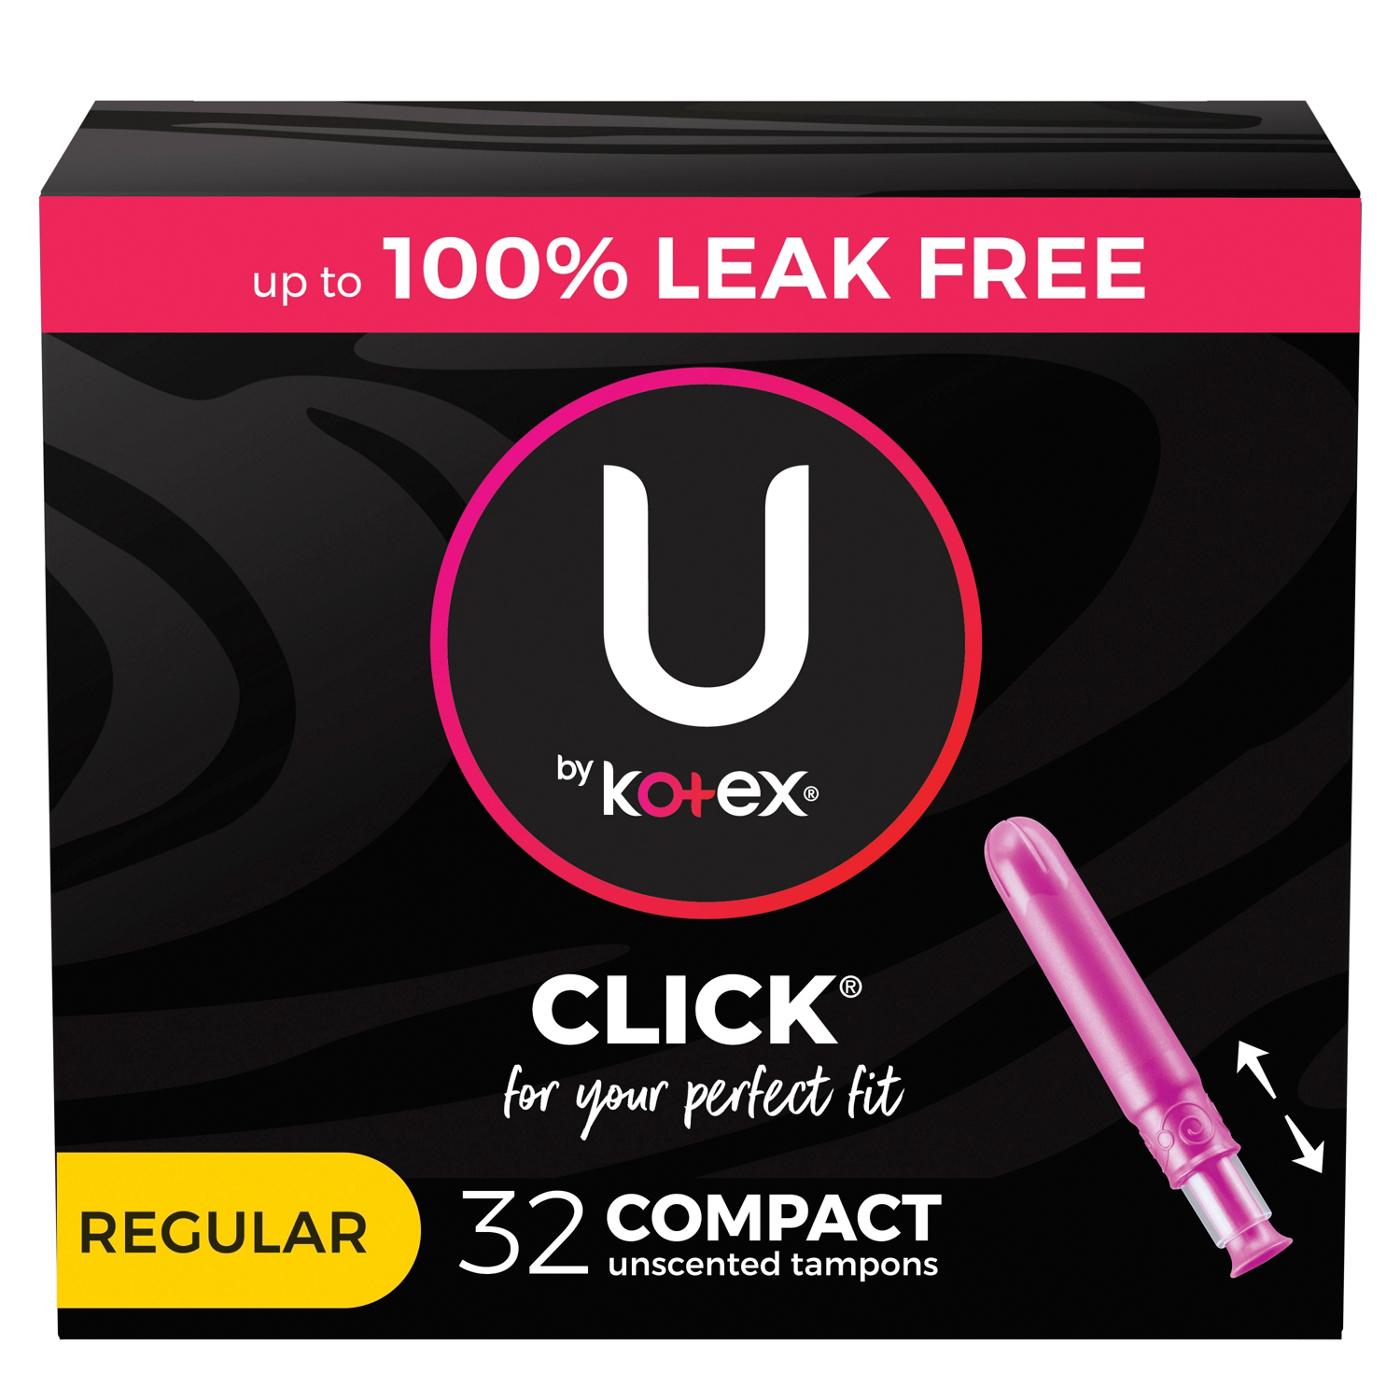 U By Kotex Click Compact Regular - Shop Tampons at H-E-B